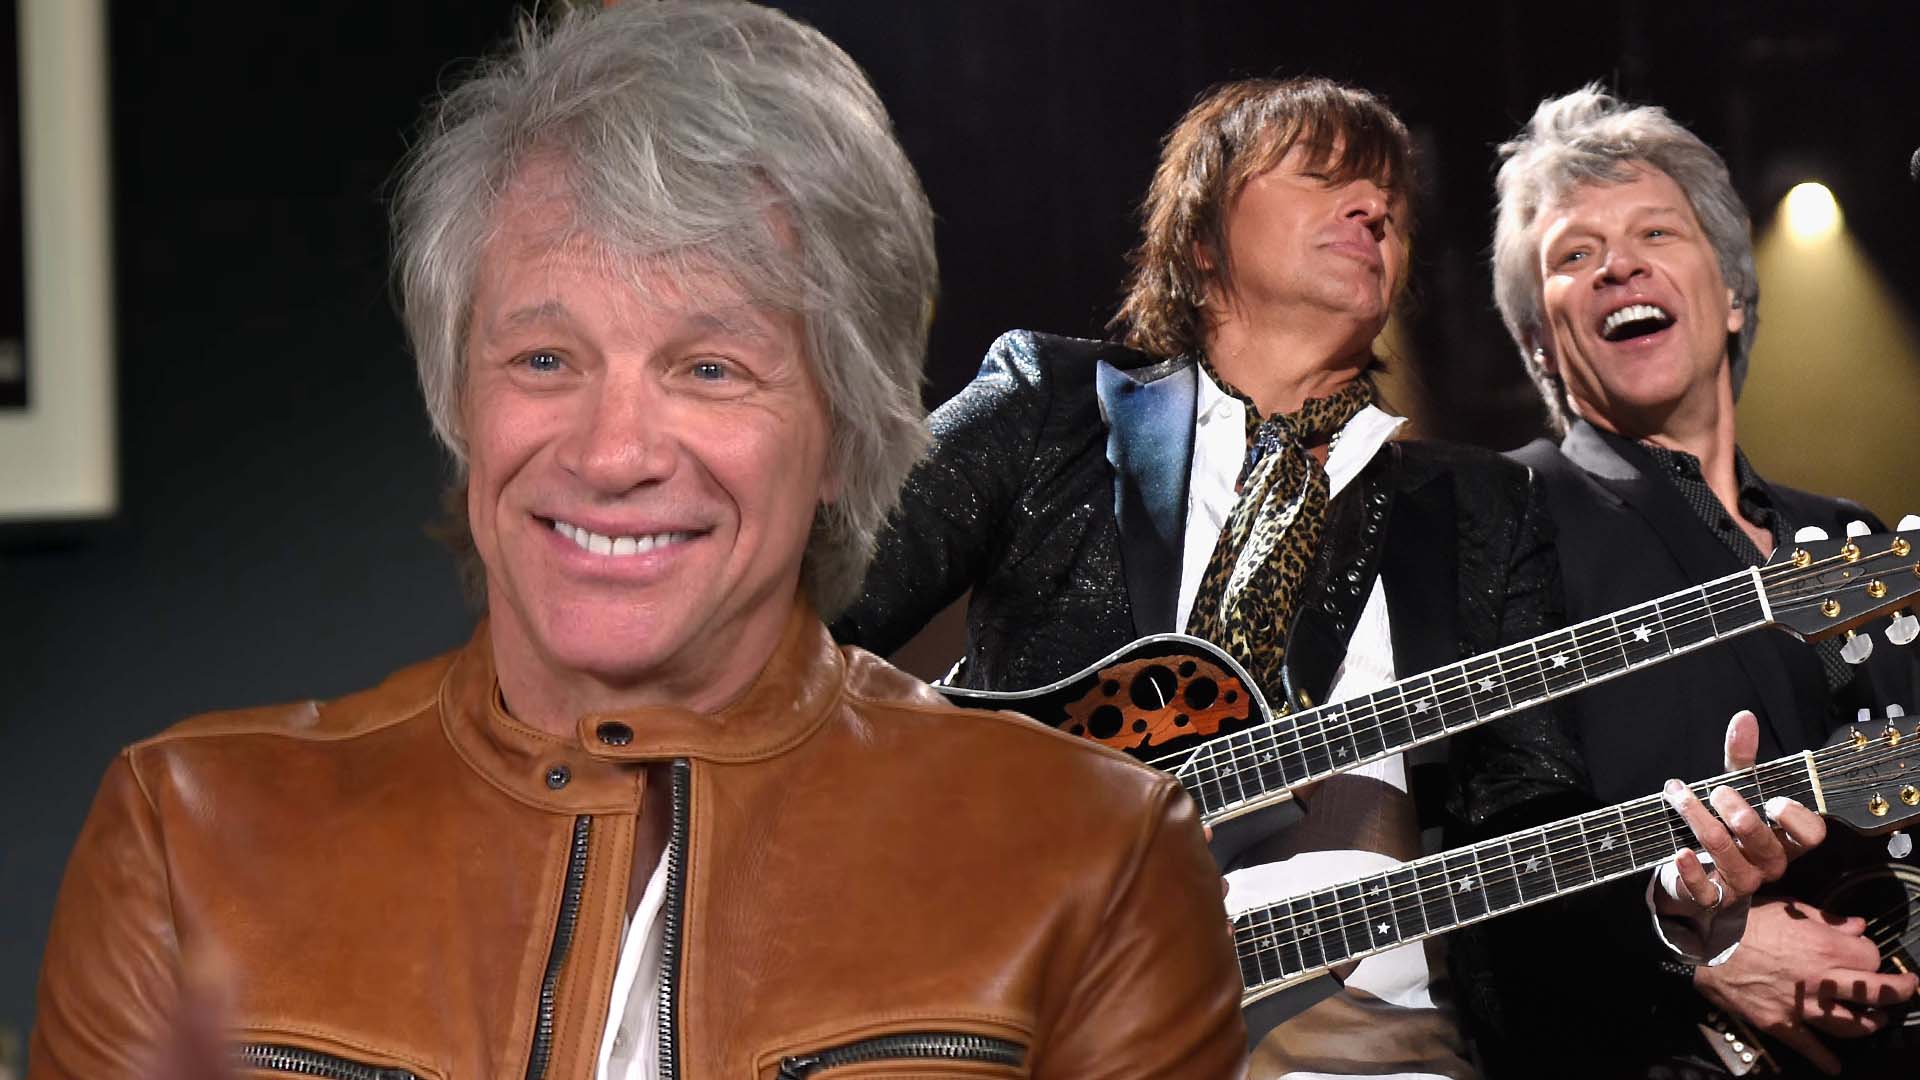 Jon Bon Jovi on His Health and Where He Stands With Richie Sambora